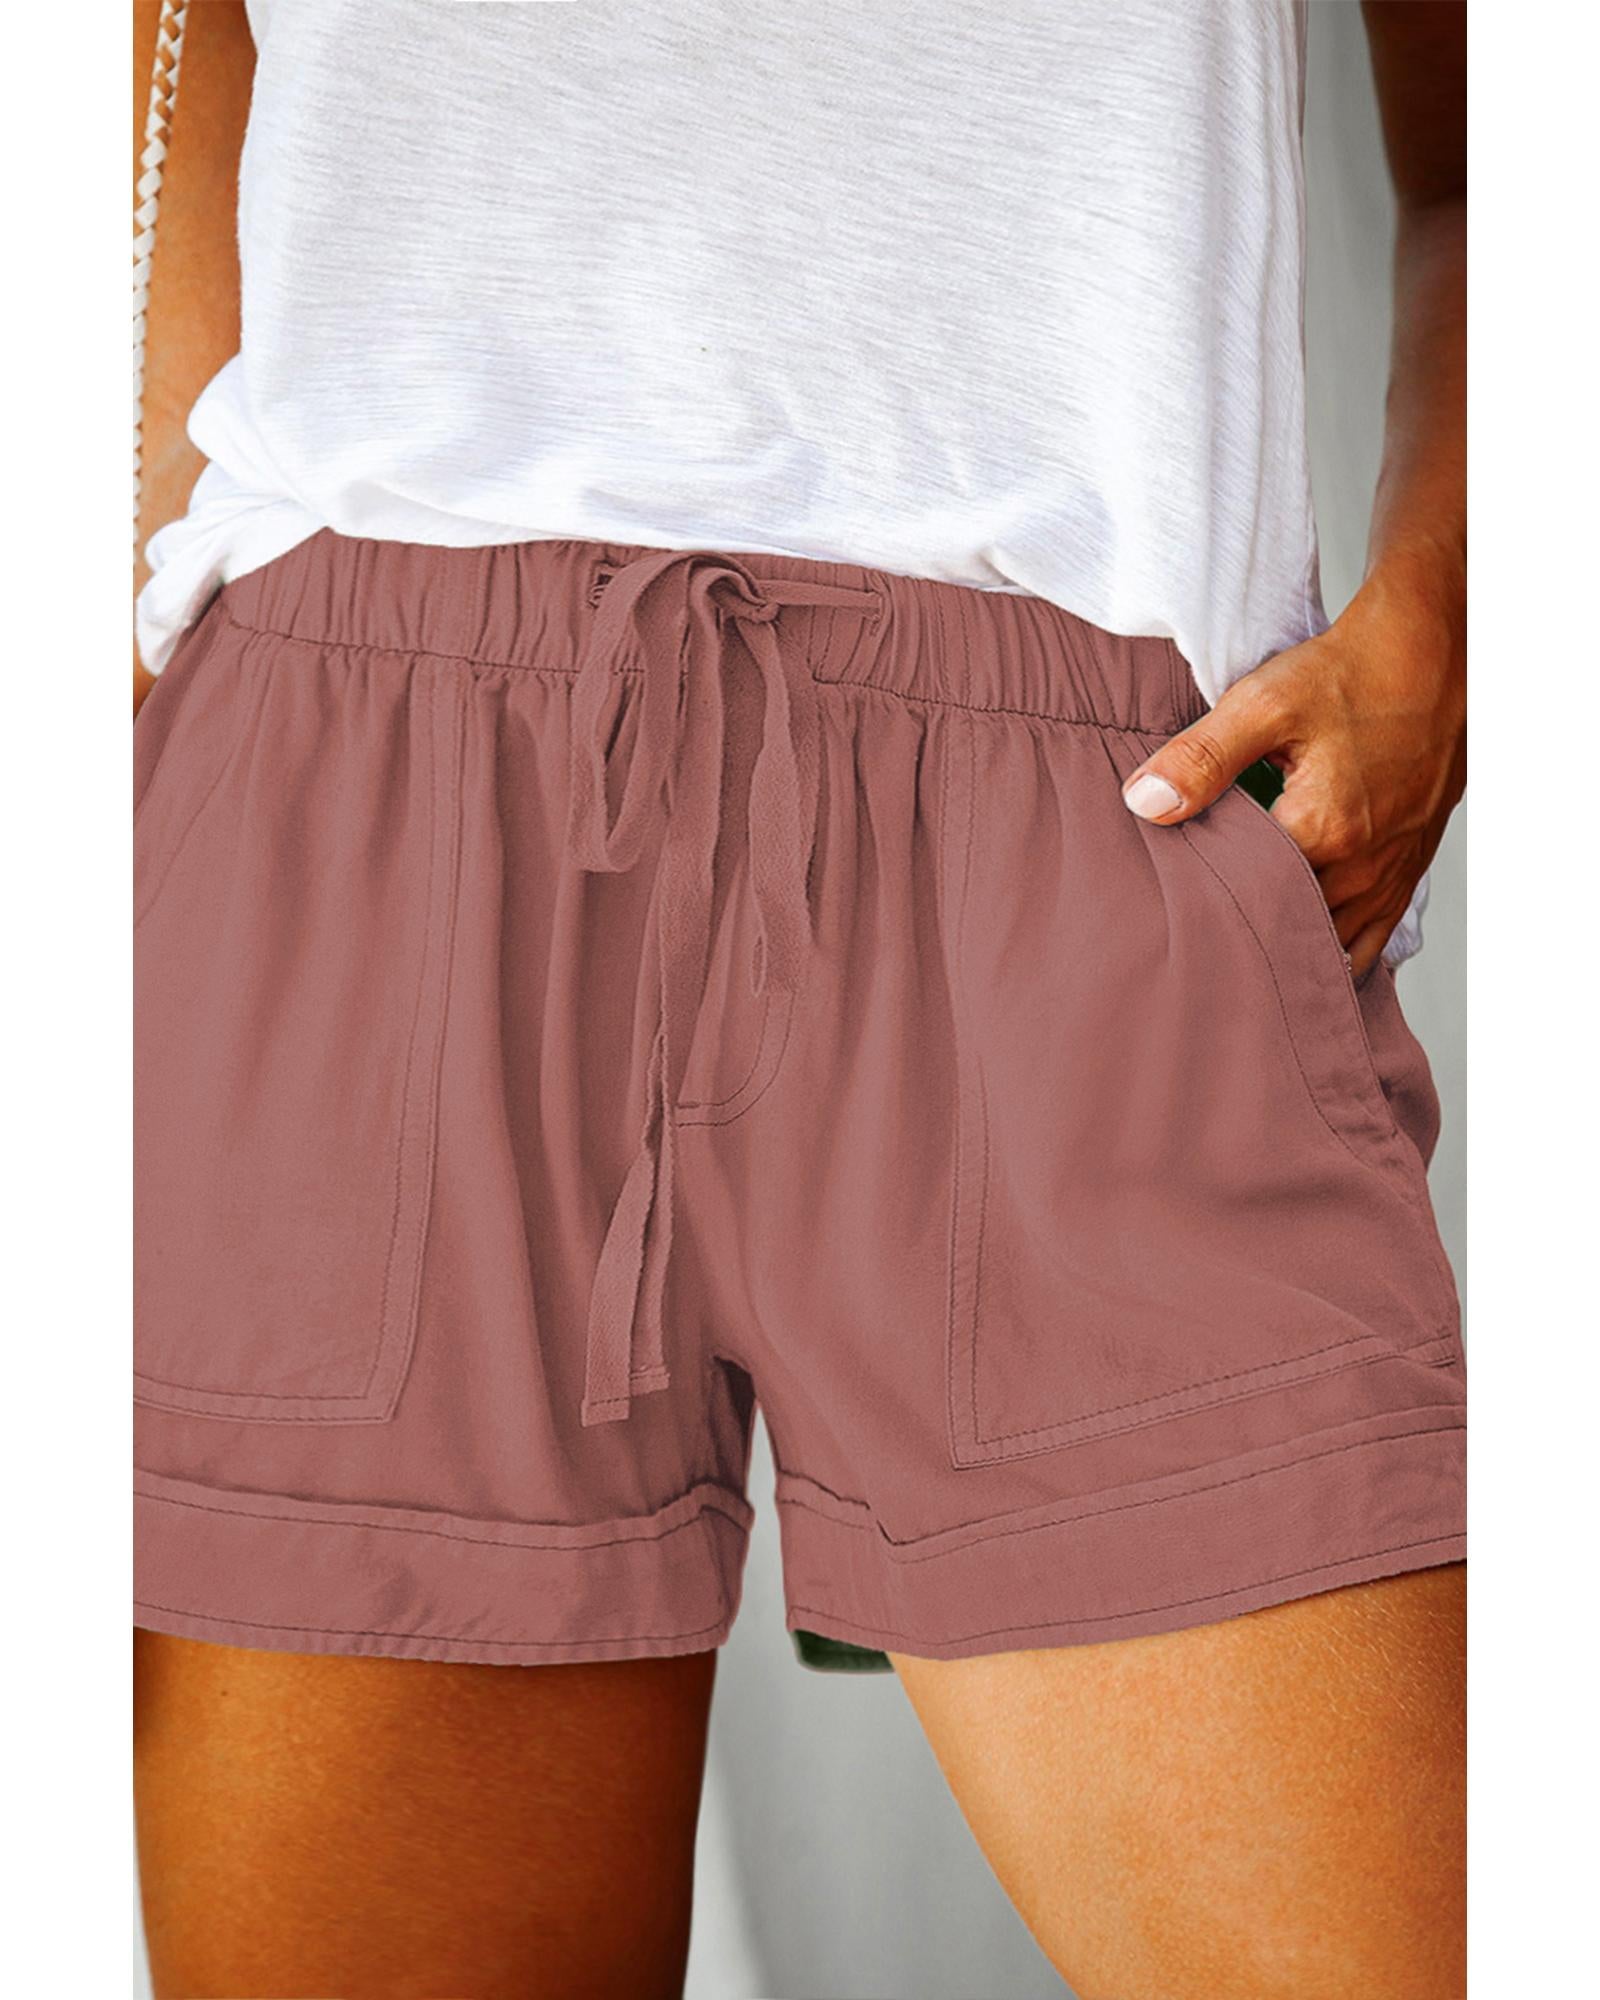 Elastic Waist Drawstring Pocket Shorts - 1X